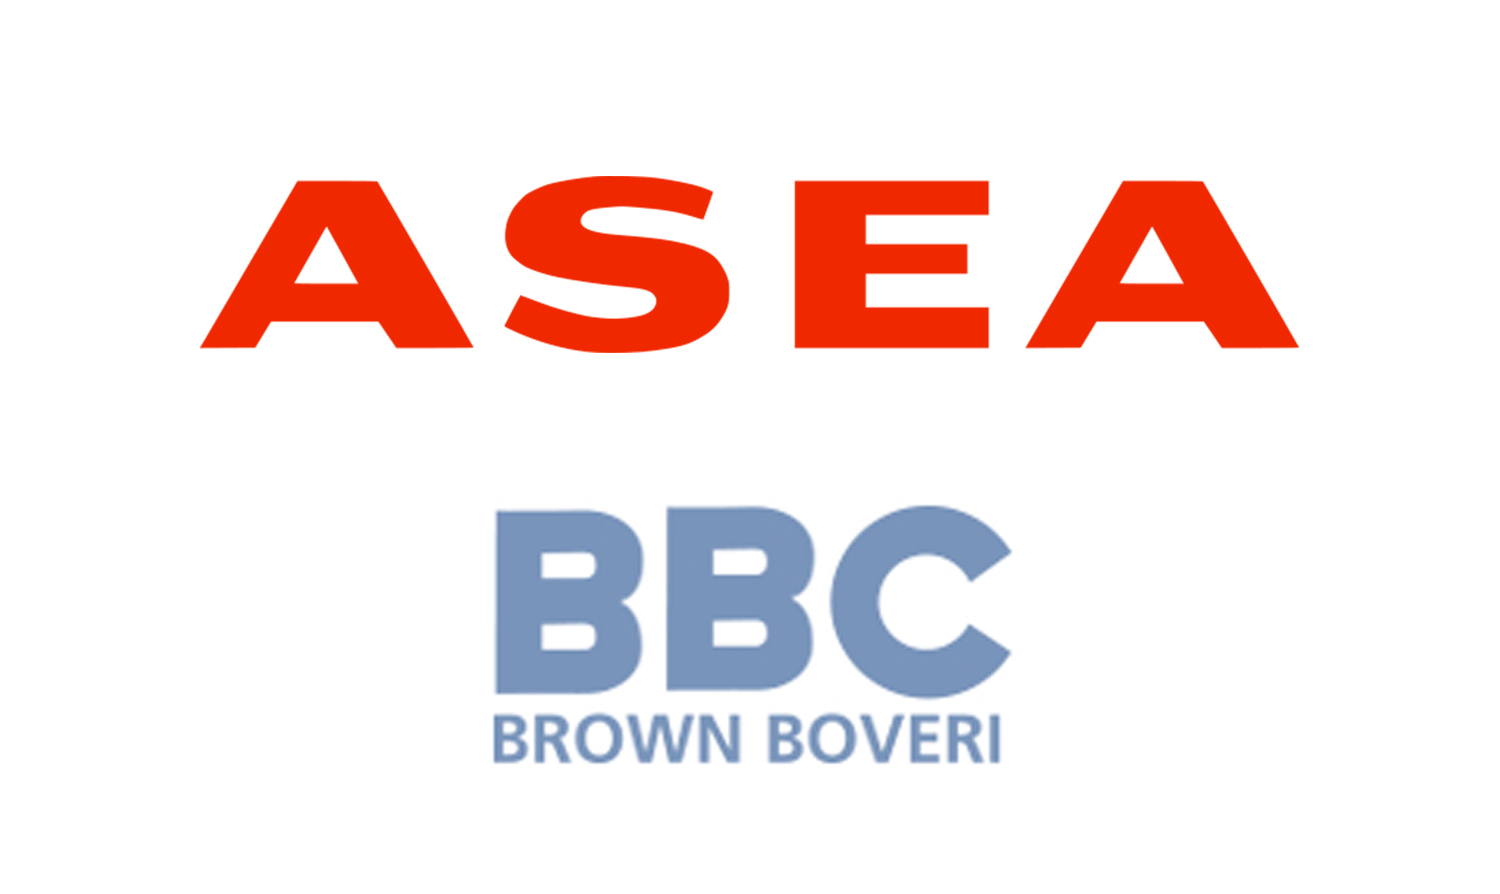 ASEA and Brown Boveri BBC logos